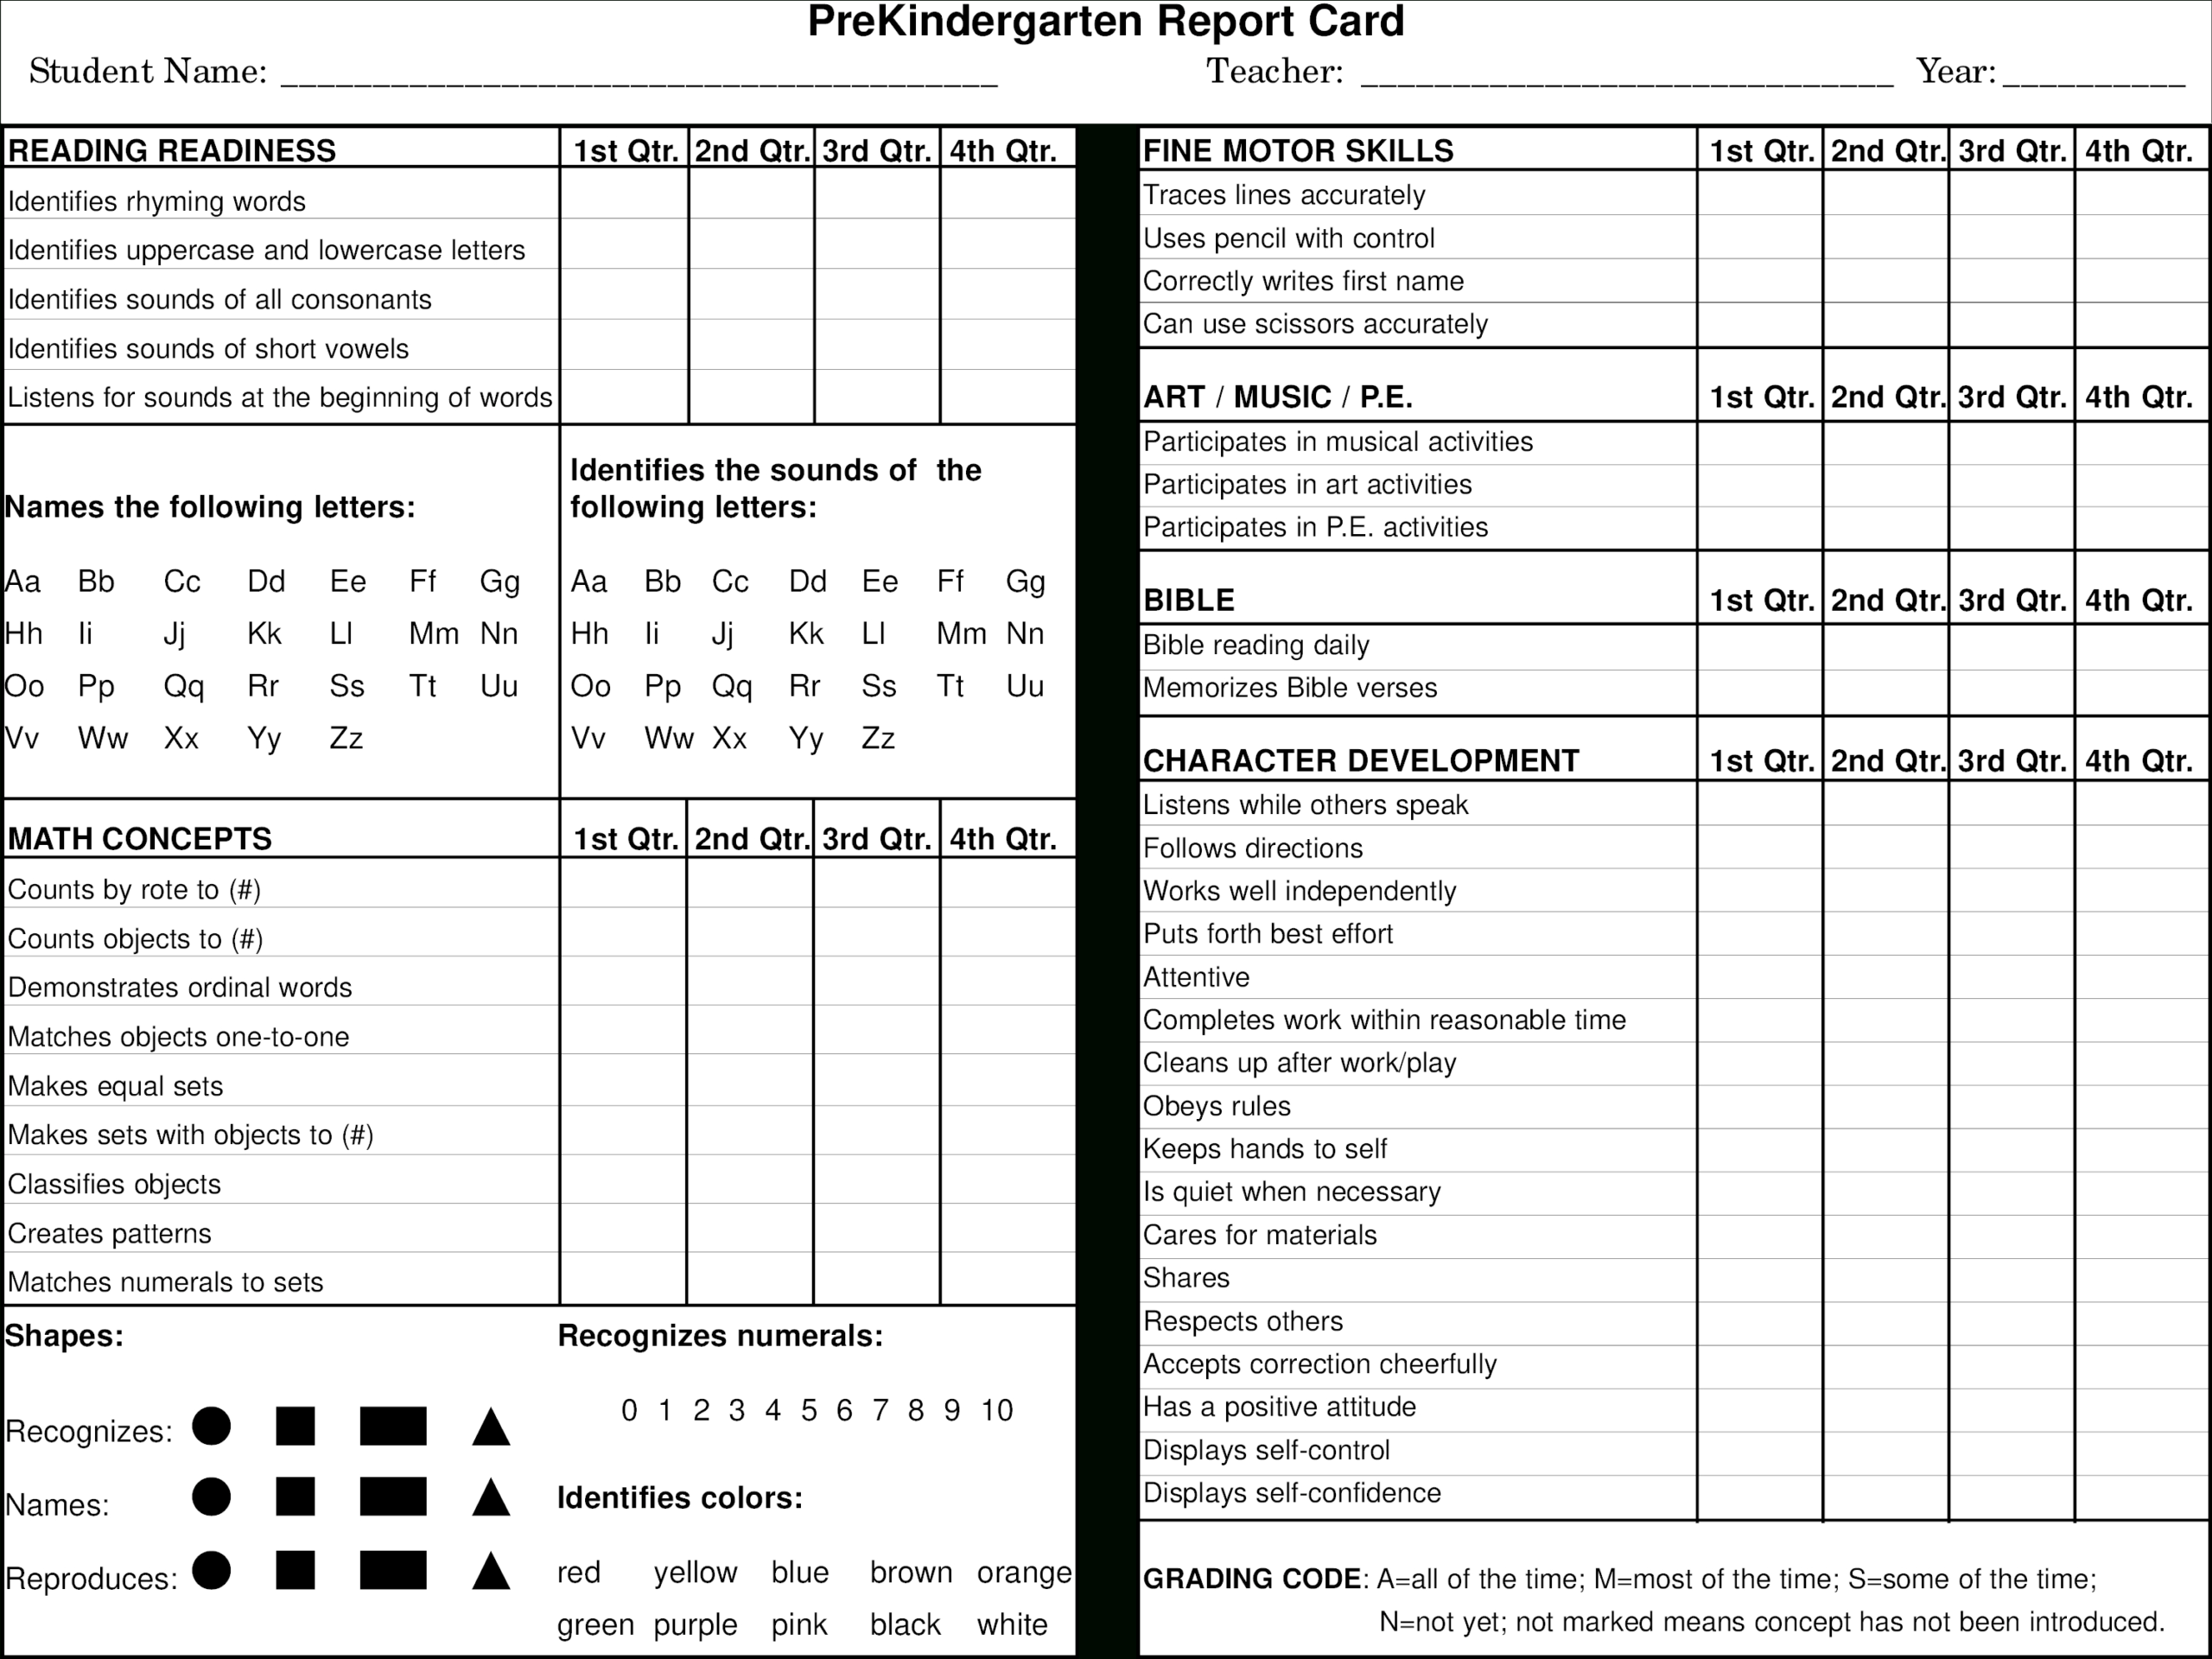 Preschool Report Card Main Image – Preschool Progress Report With Regard To Preschool Progress Report Template